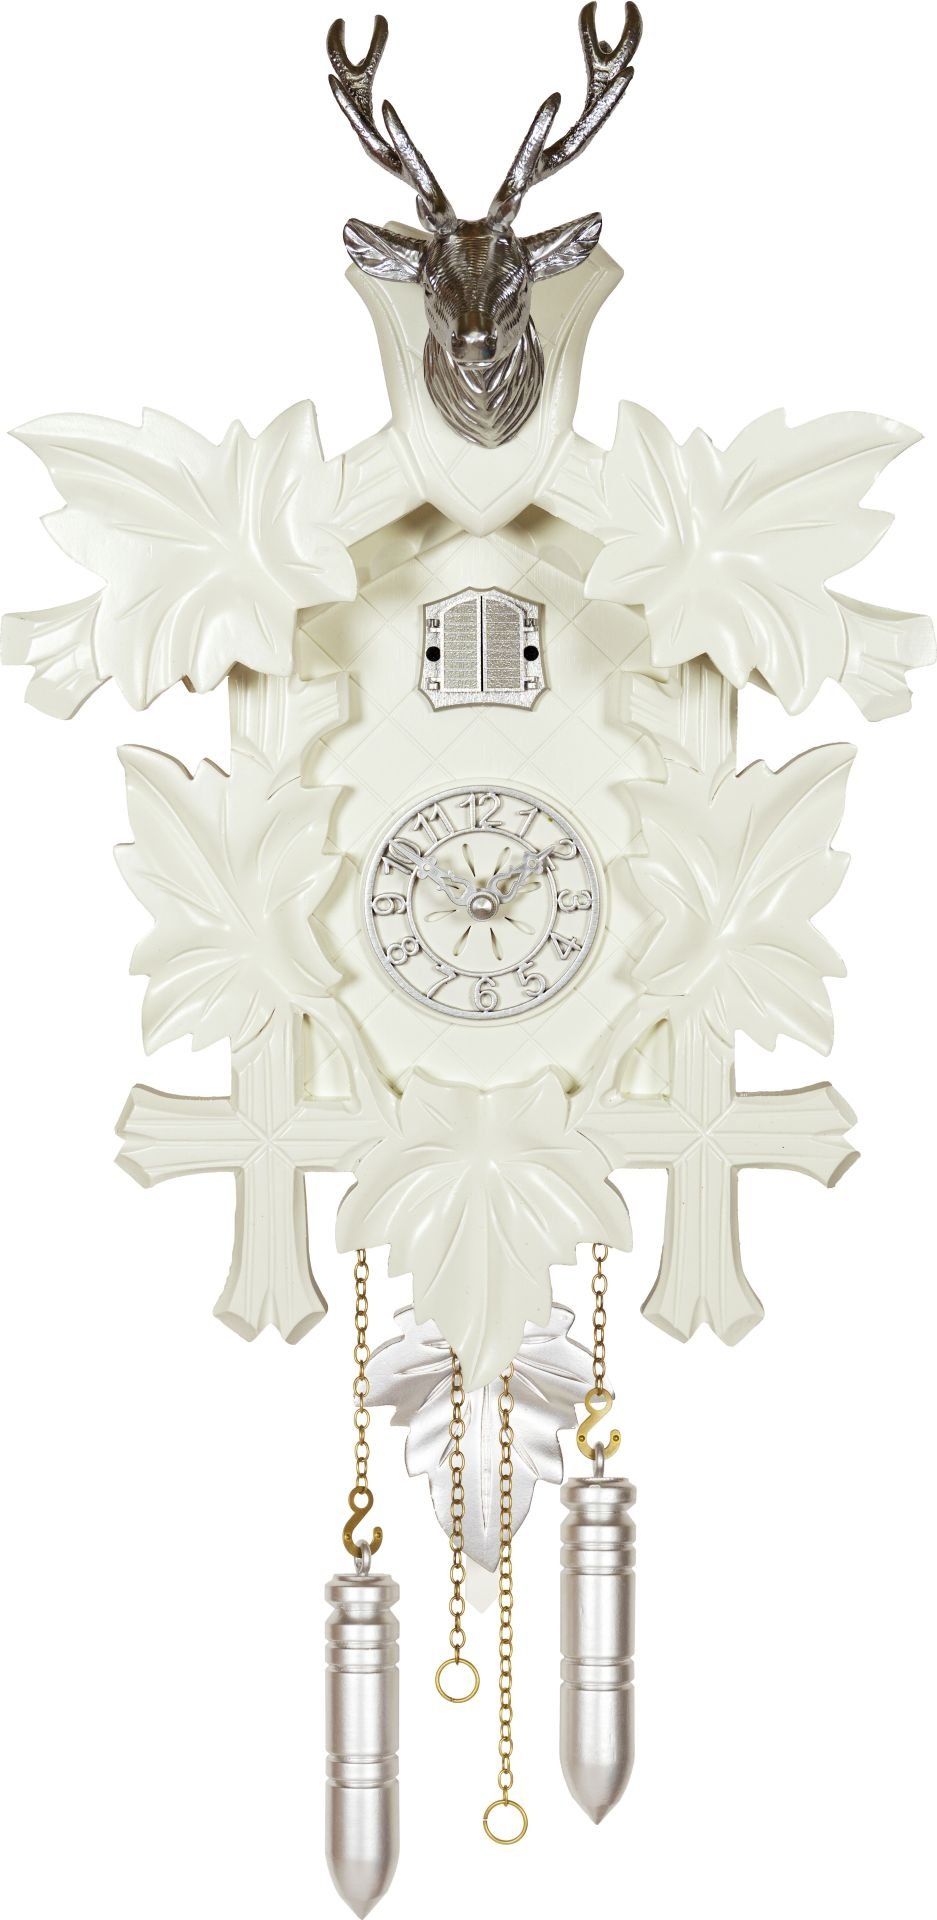 Reloj de cuco estilo moderno de cuarzo 40cm de Trenkle Uhren